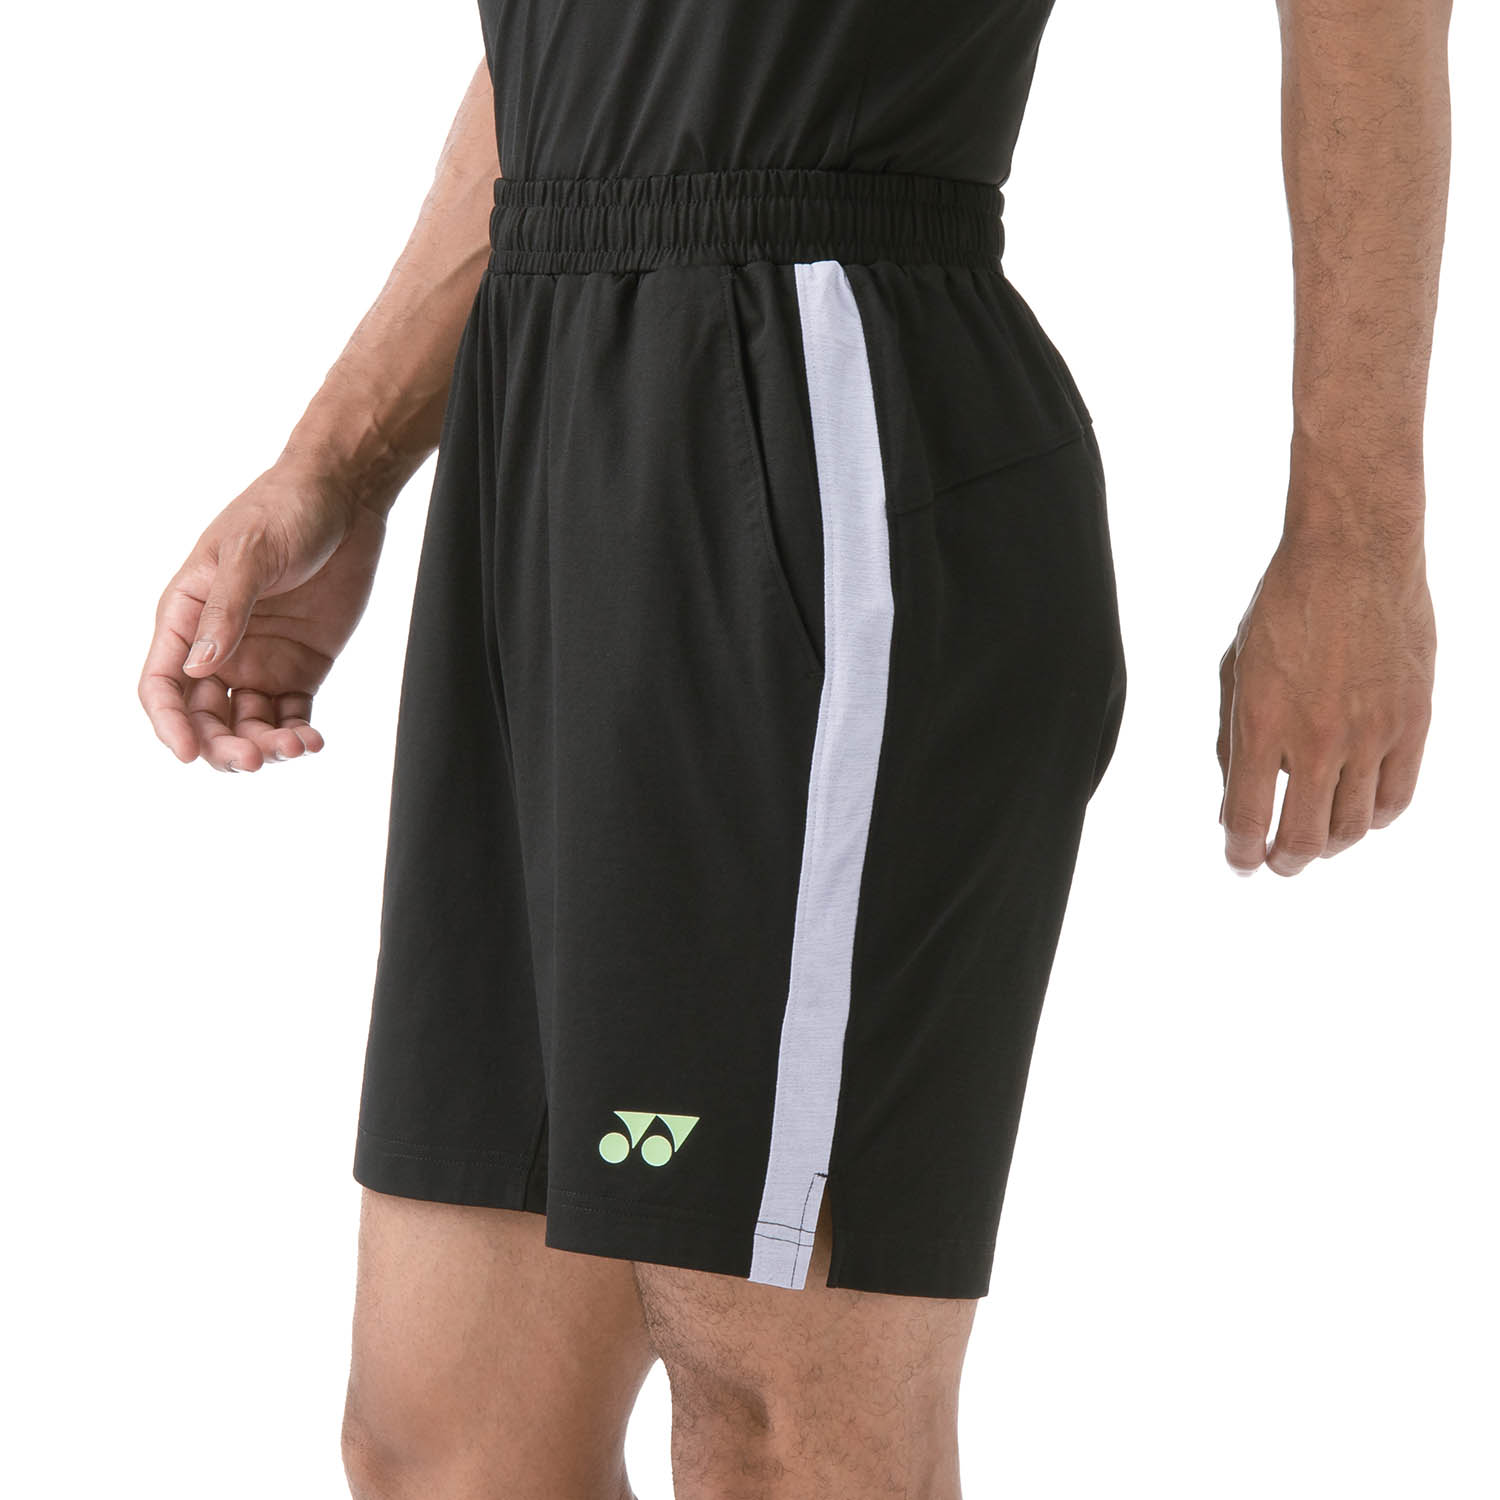 Yonex Tournament 9in Shorts - Black